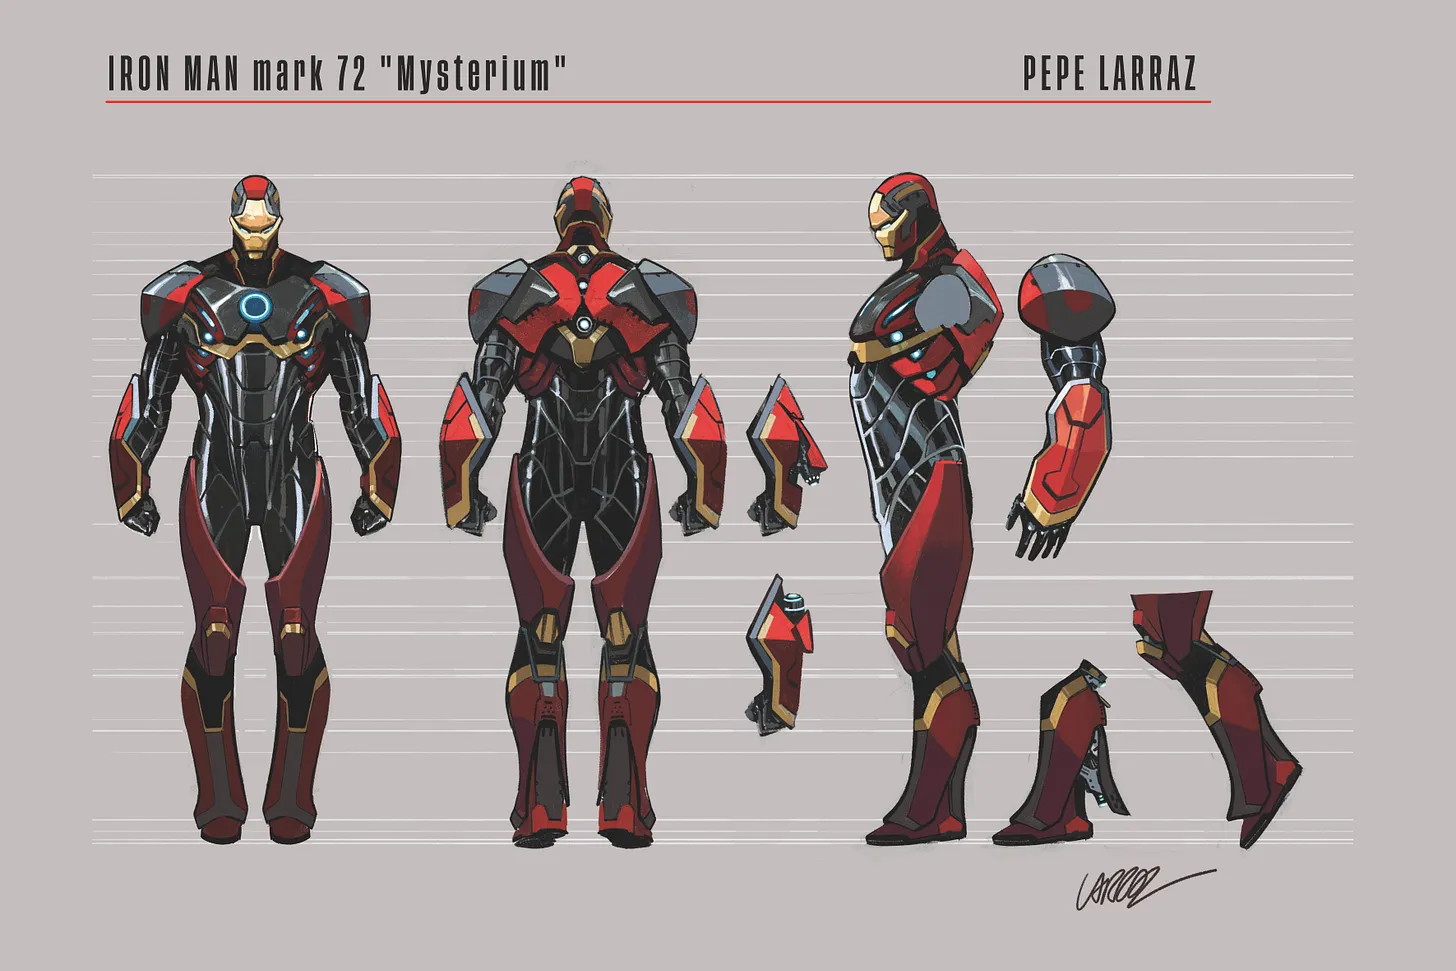 New Iron Man Mark 72 armor revealed